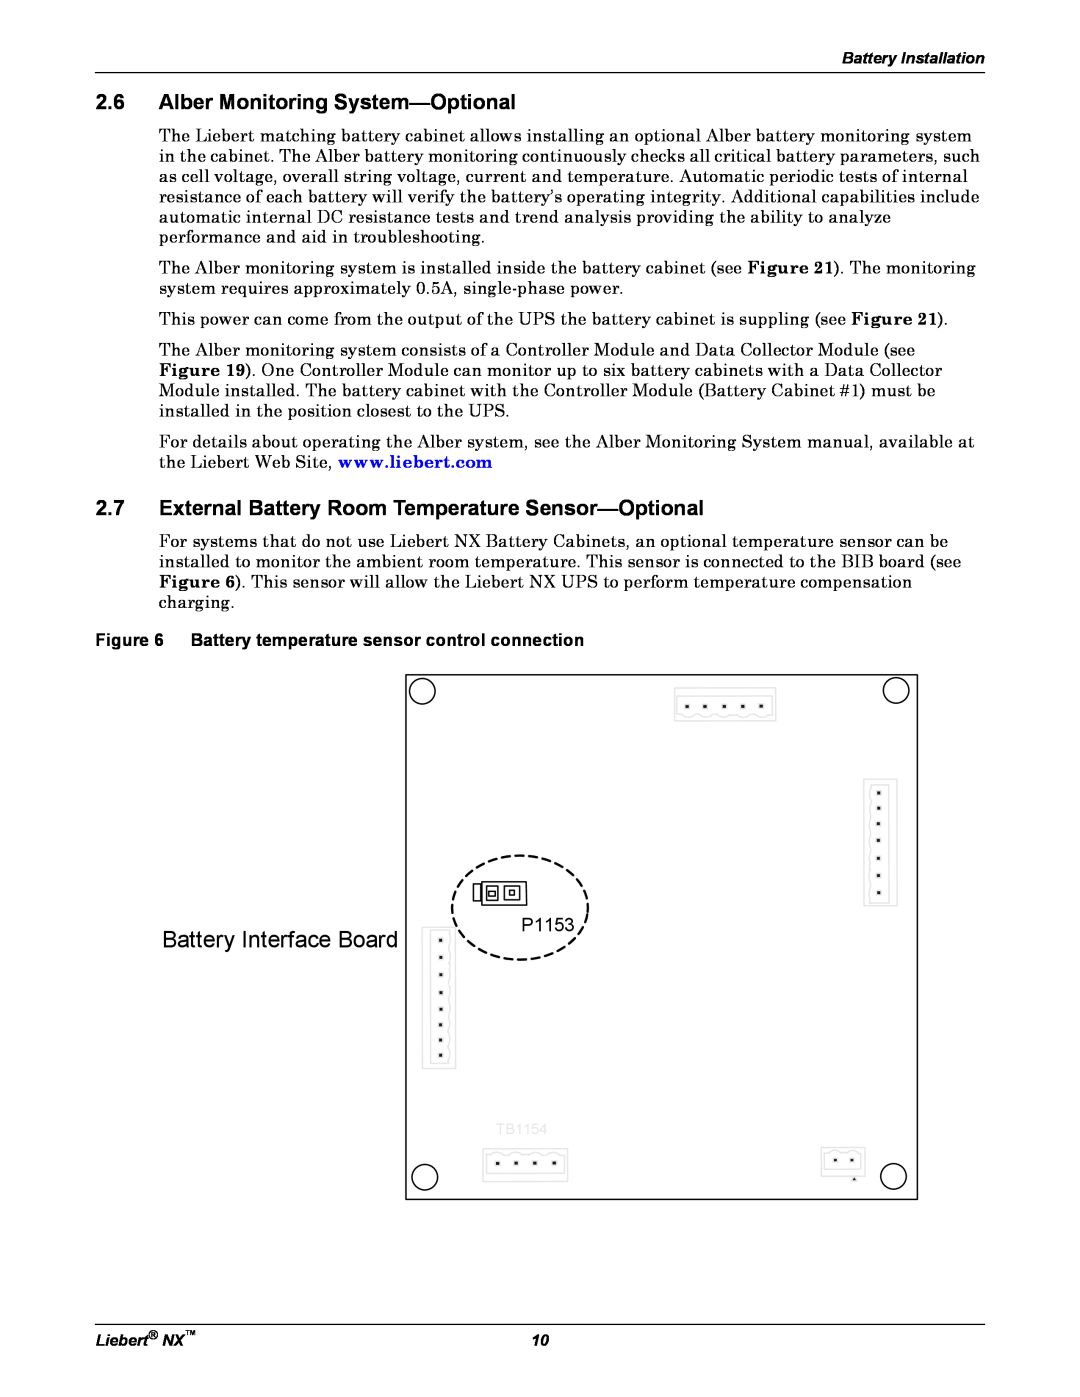 Emerson 225-600KVA installation manual Battery Interface Board, Alber Monitoring System-Optional 